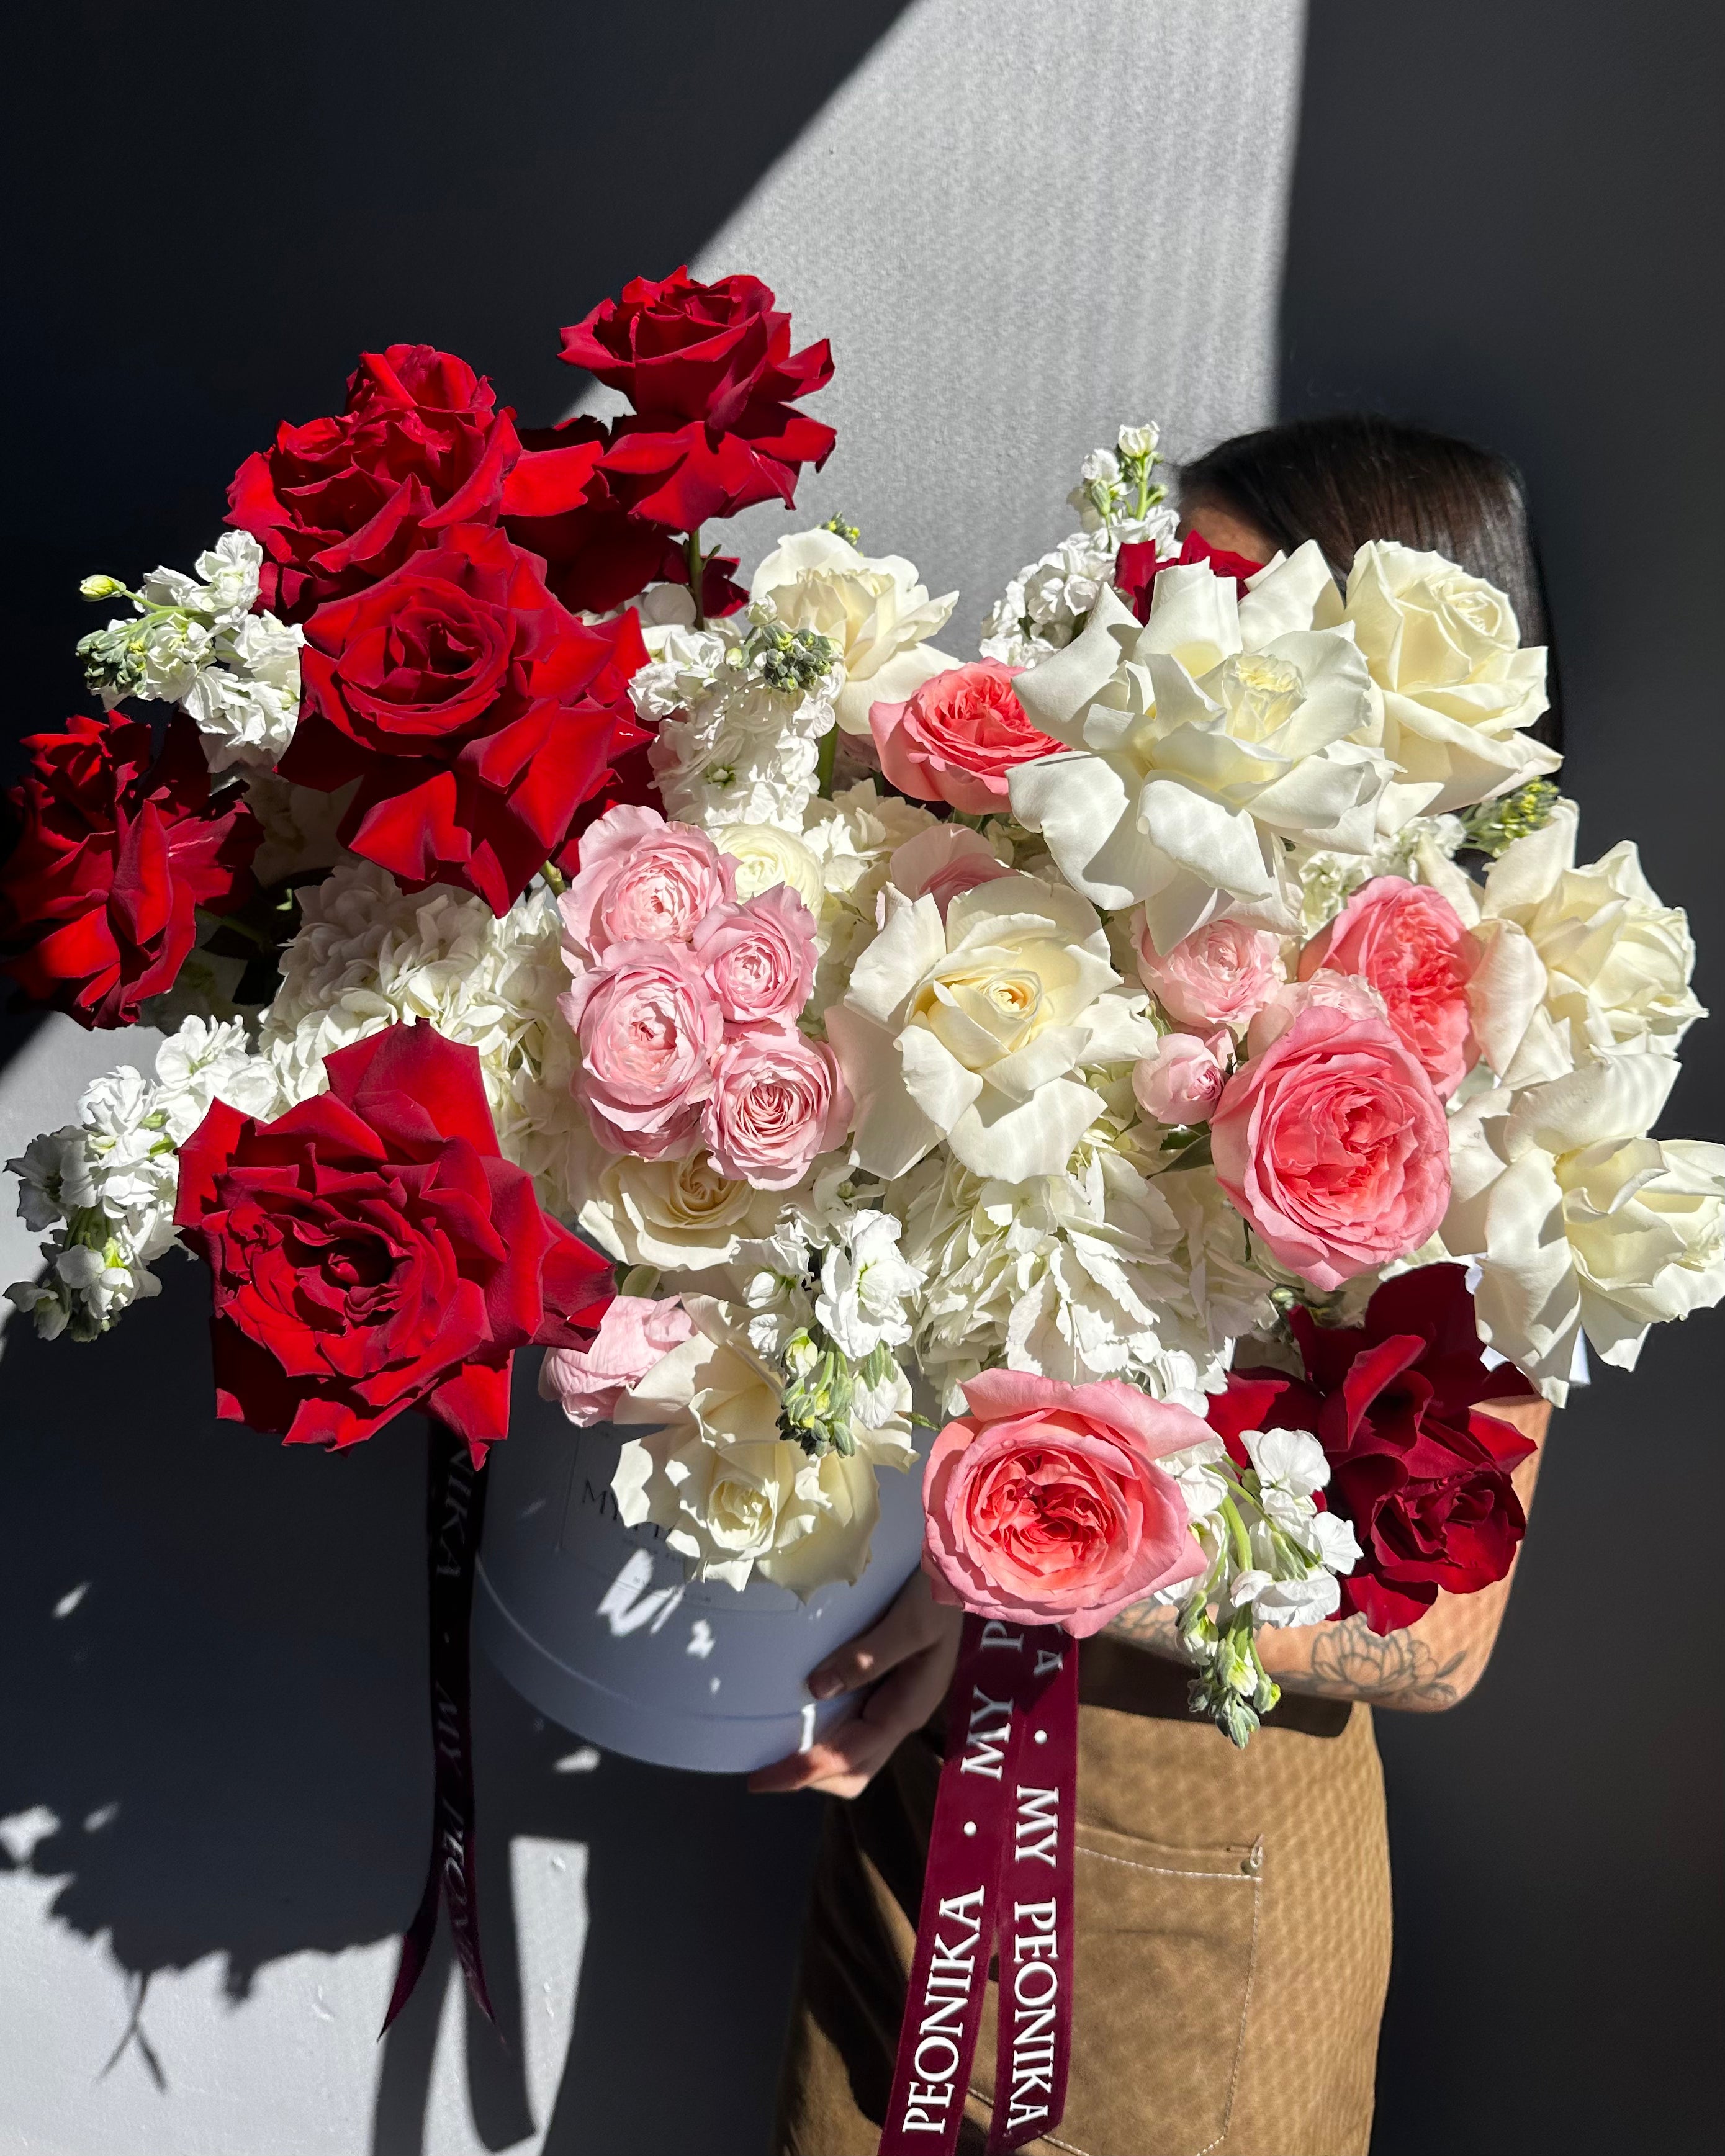 Flower box “Call me back” - roses, hydrangeas, stock